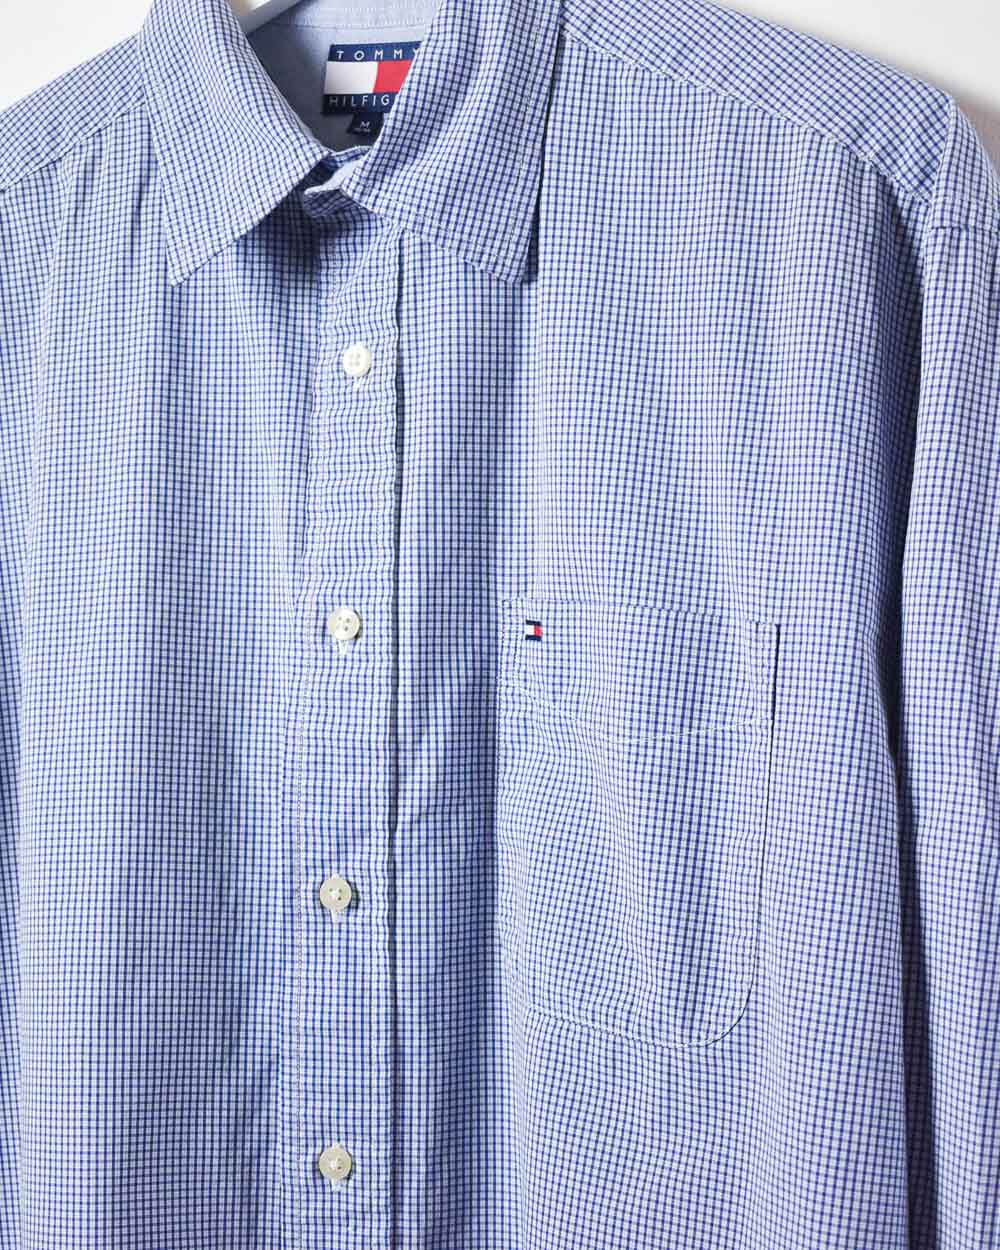 BabyBlue Tommy Hilfiger Checked Shirt - Medium